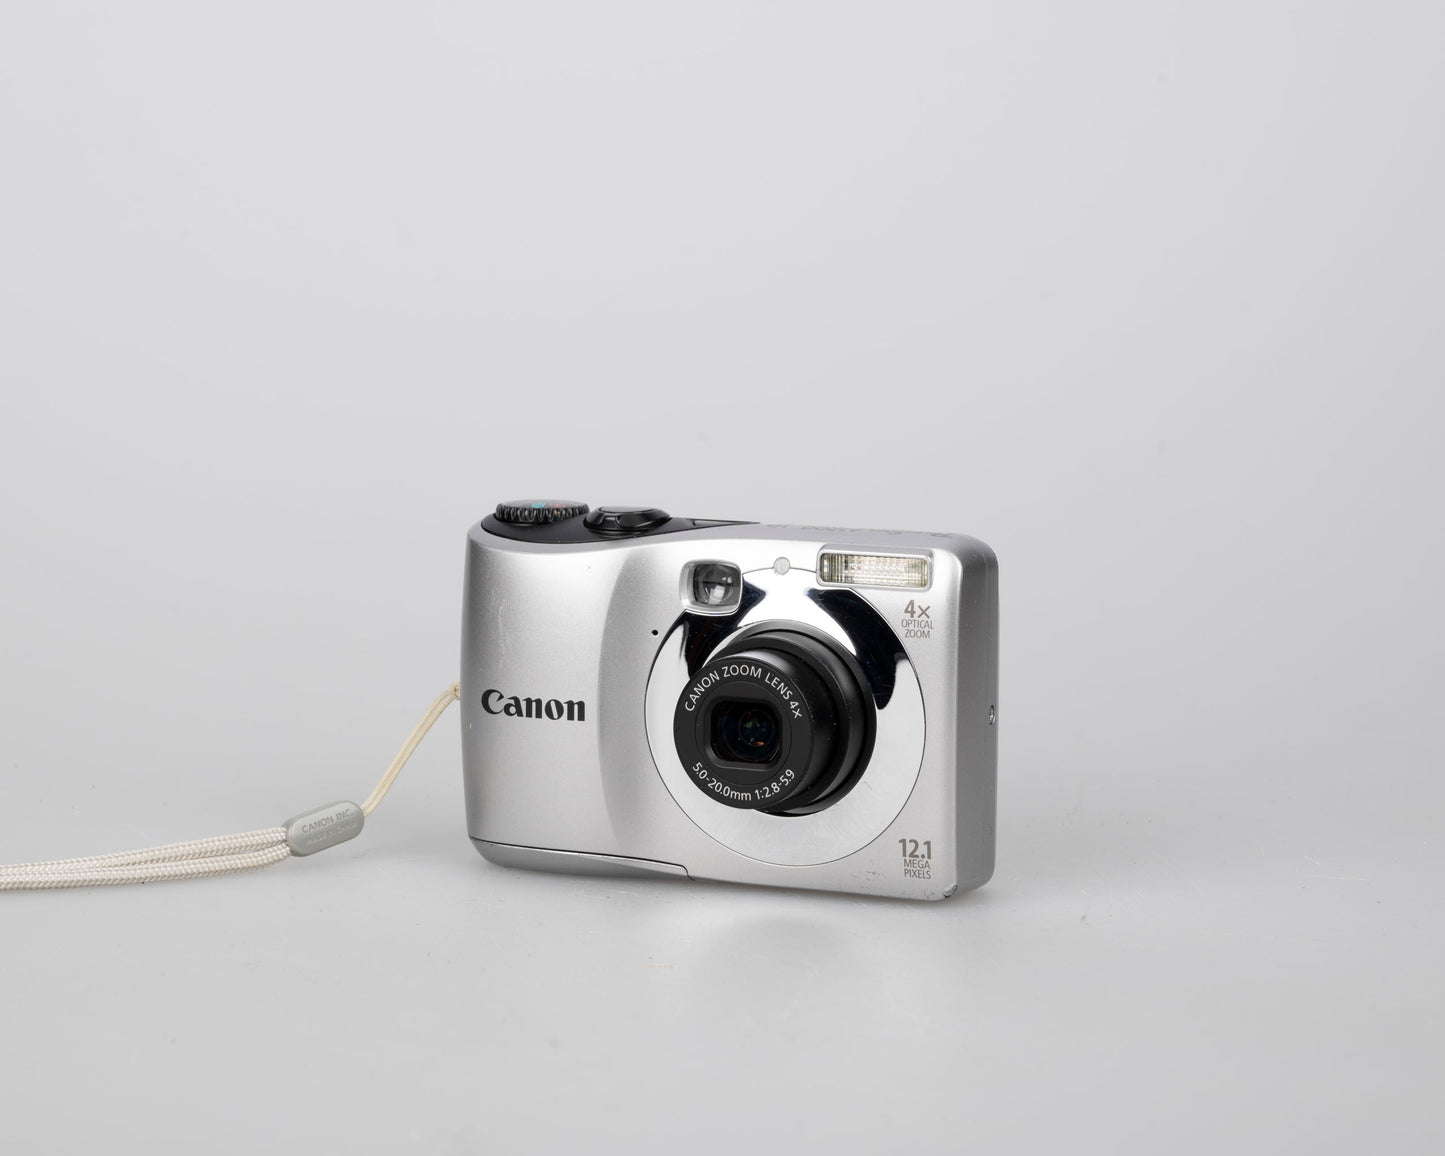 Canon Powershot A1200 digicam w/ 12 MP CCD sensor + 2 GB SD card (uses AA batteries)